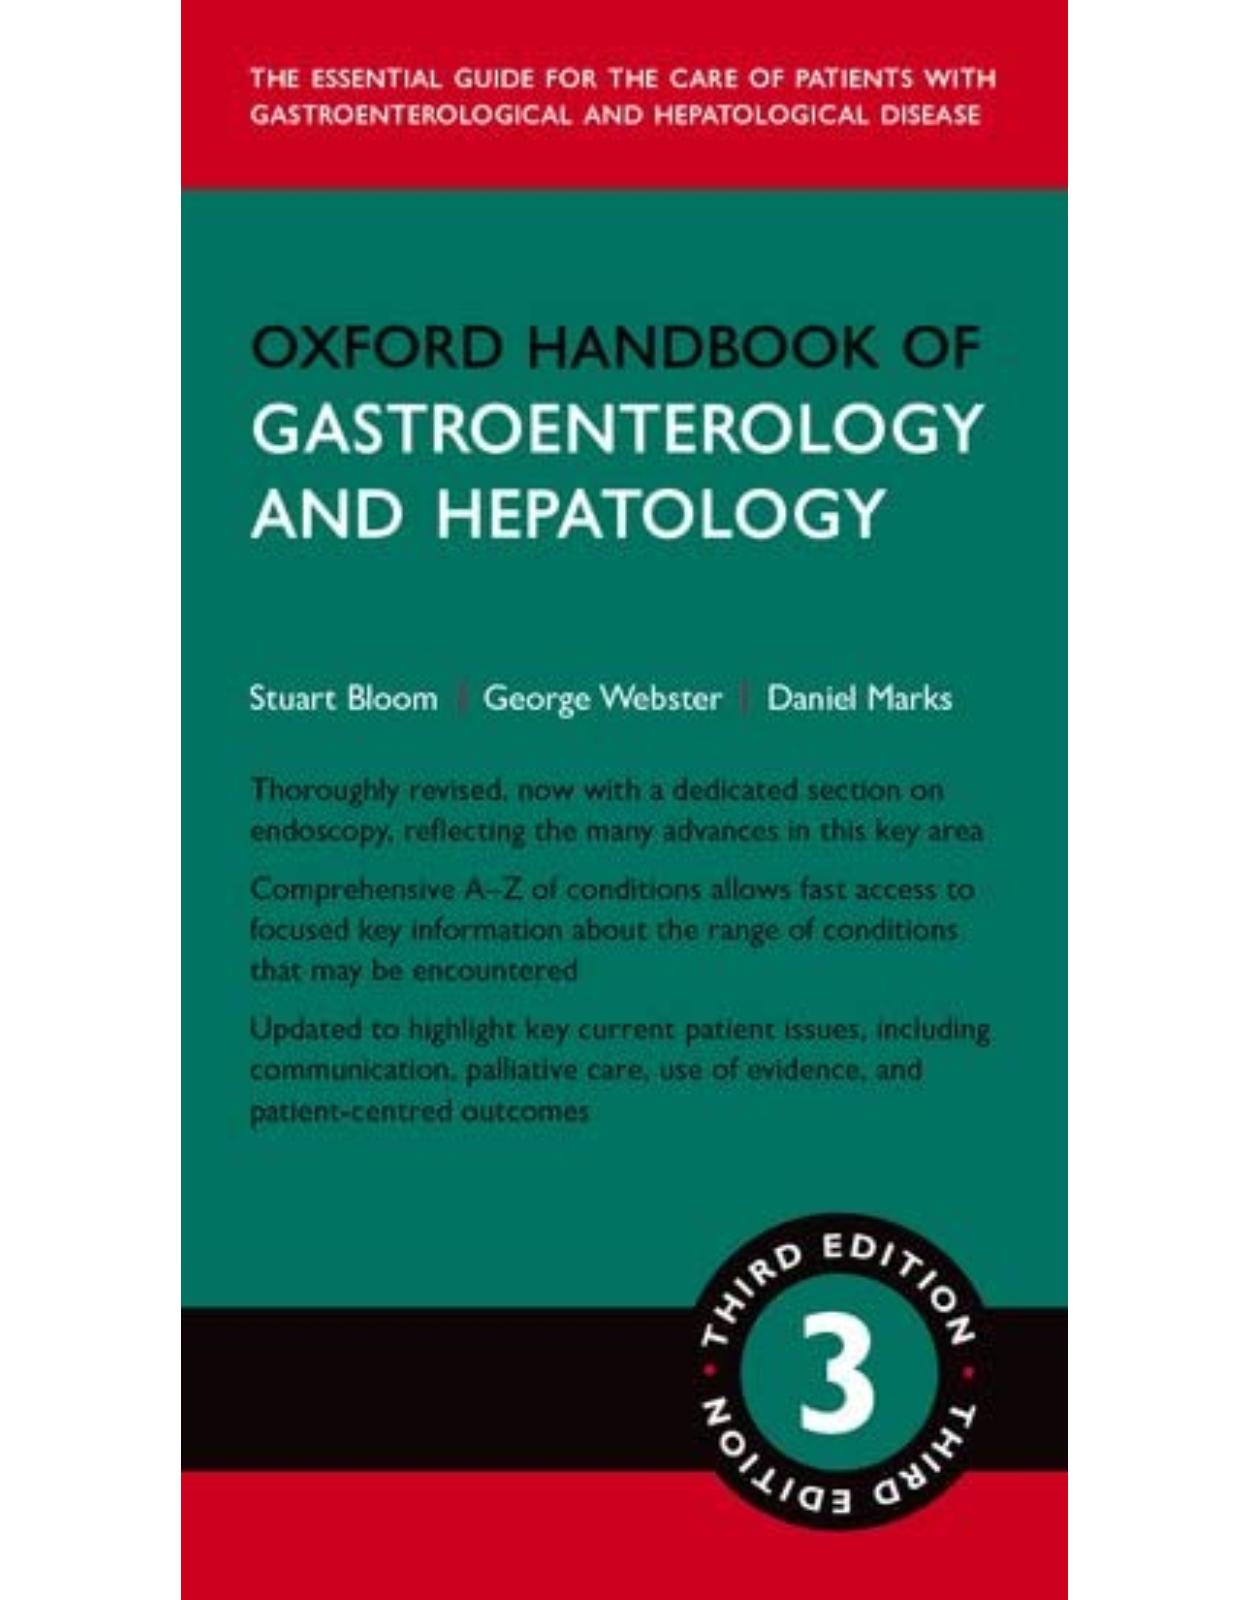 Oxford Handbook of Gastroenterology & Hepatology (3/e)